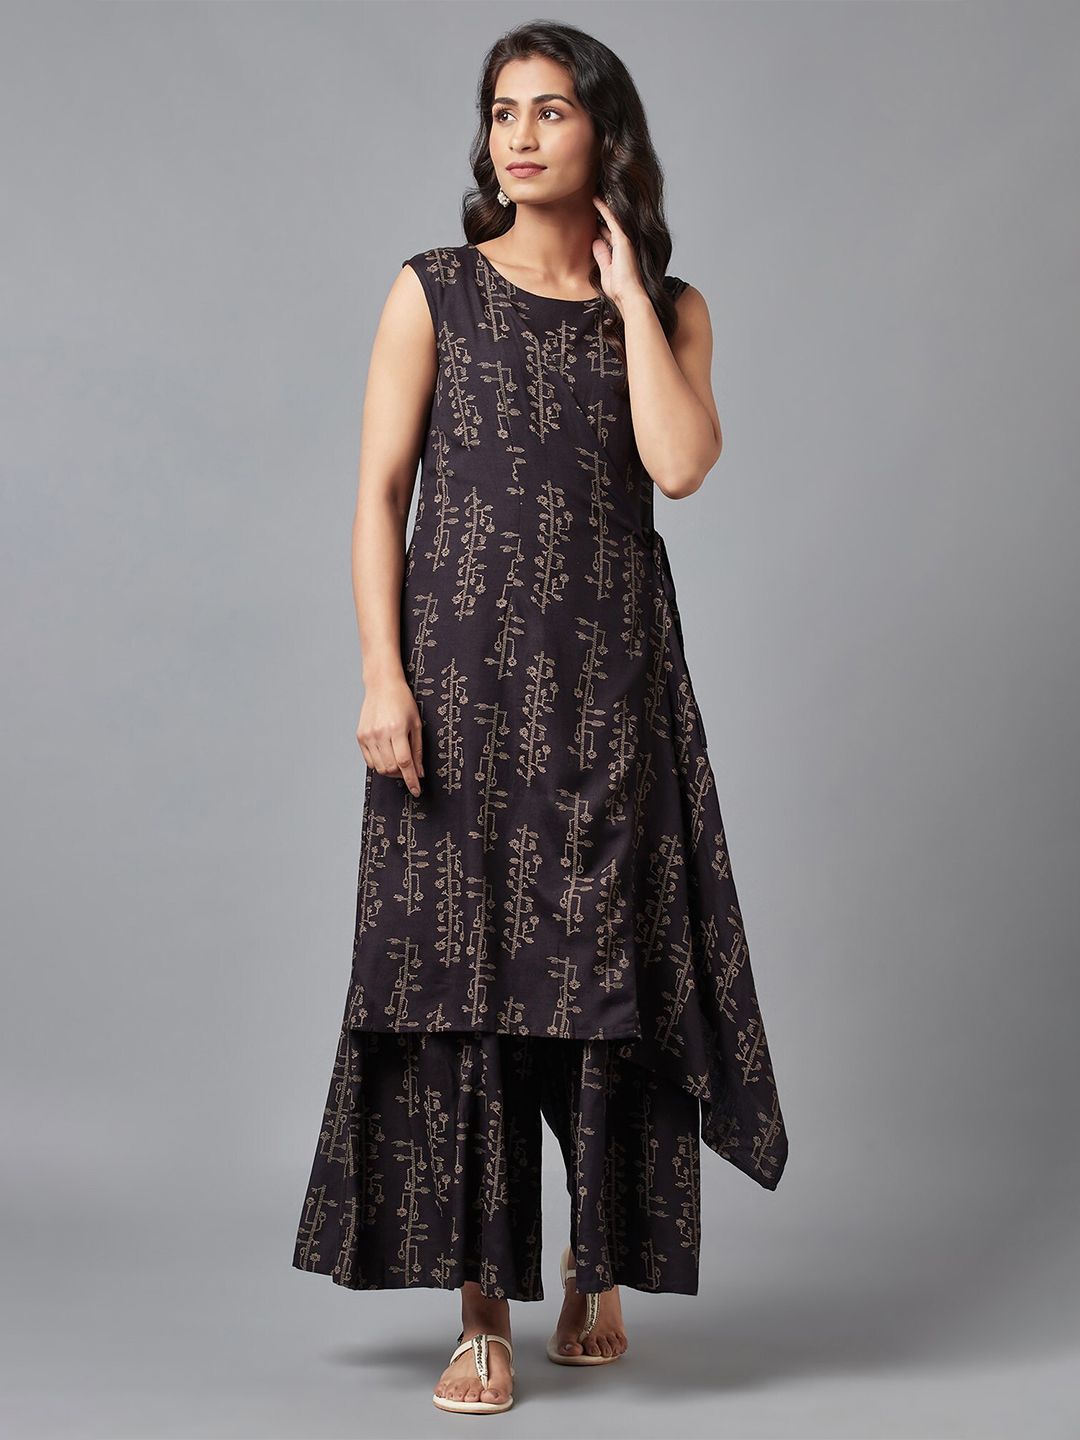 W Women Black Floral Printed Jumpsuit Price in India